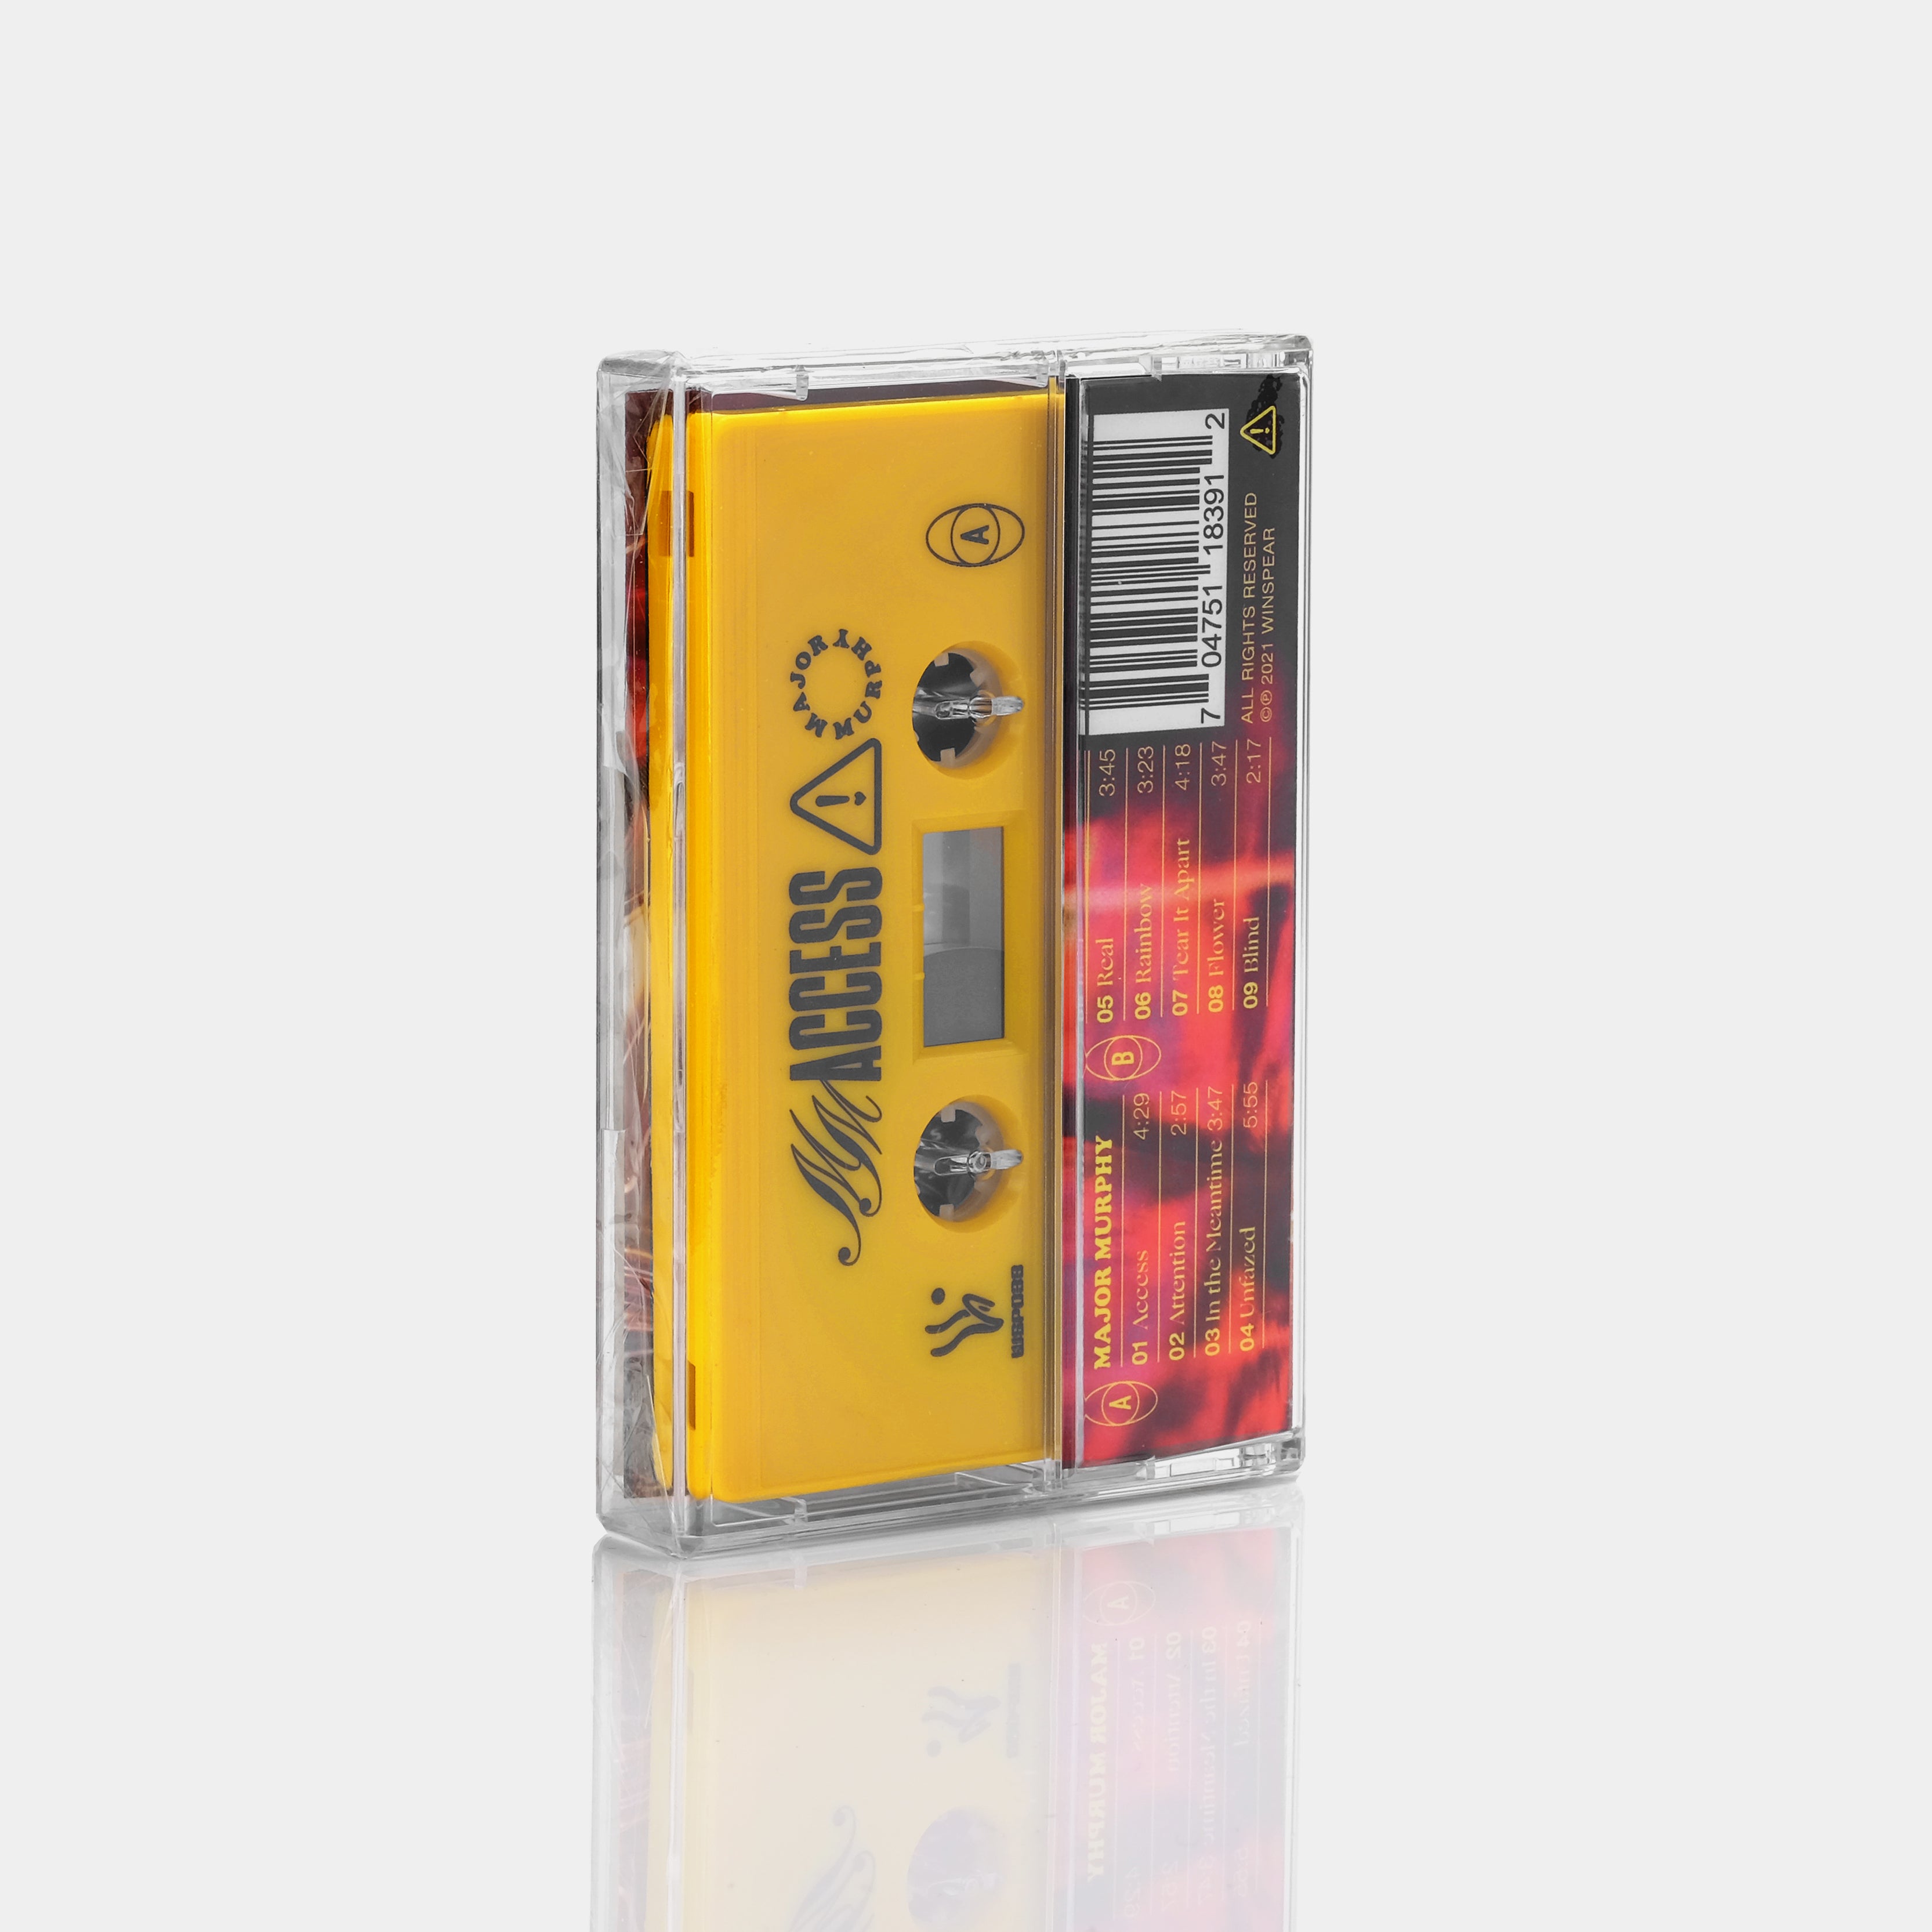 Major Murphy - Access Cassette Tape